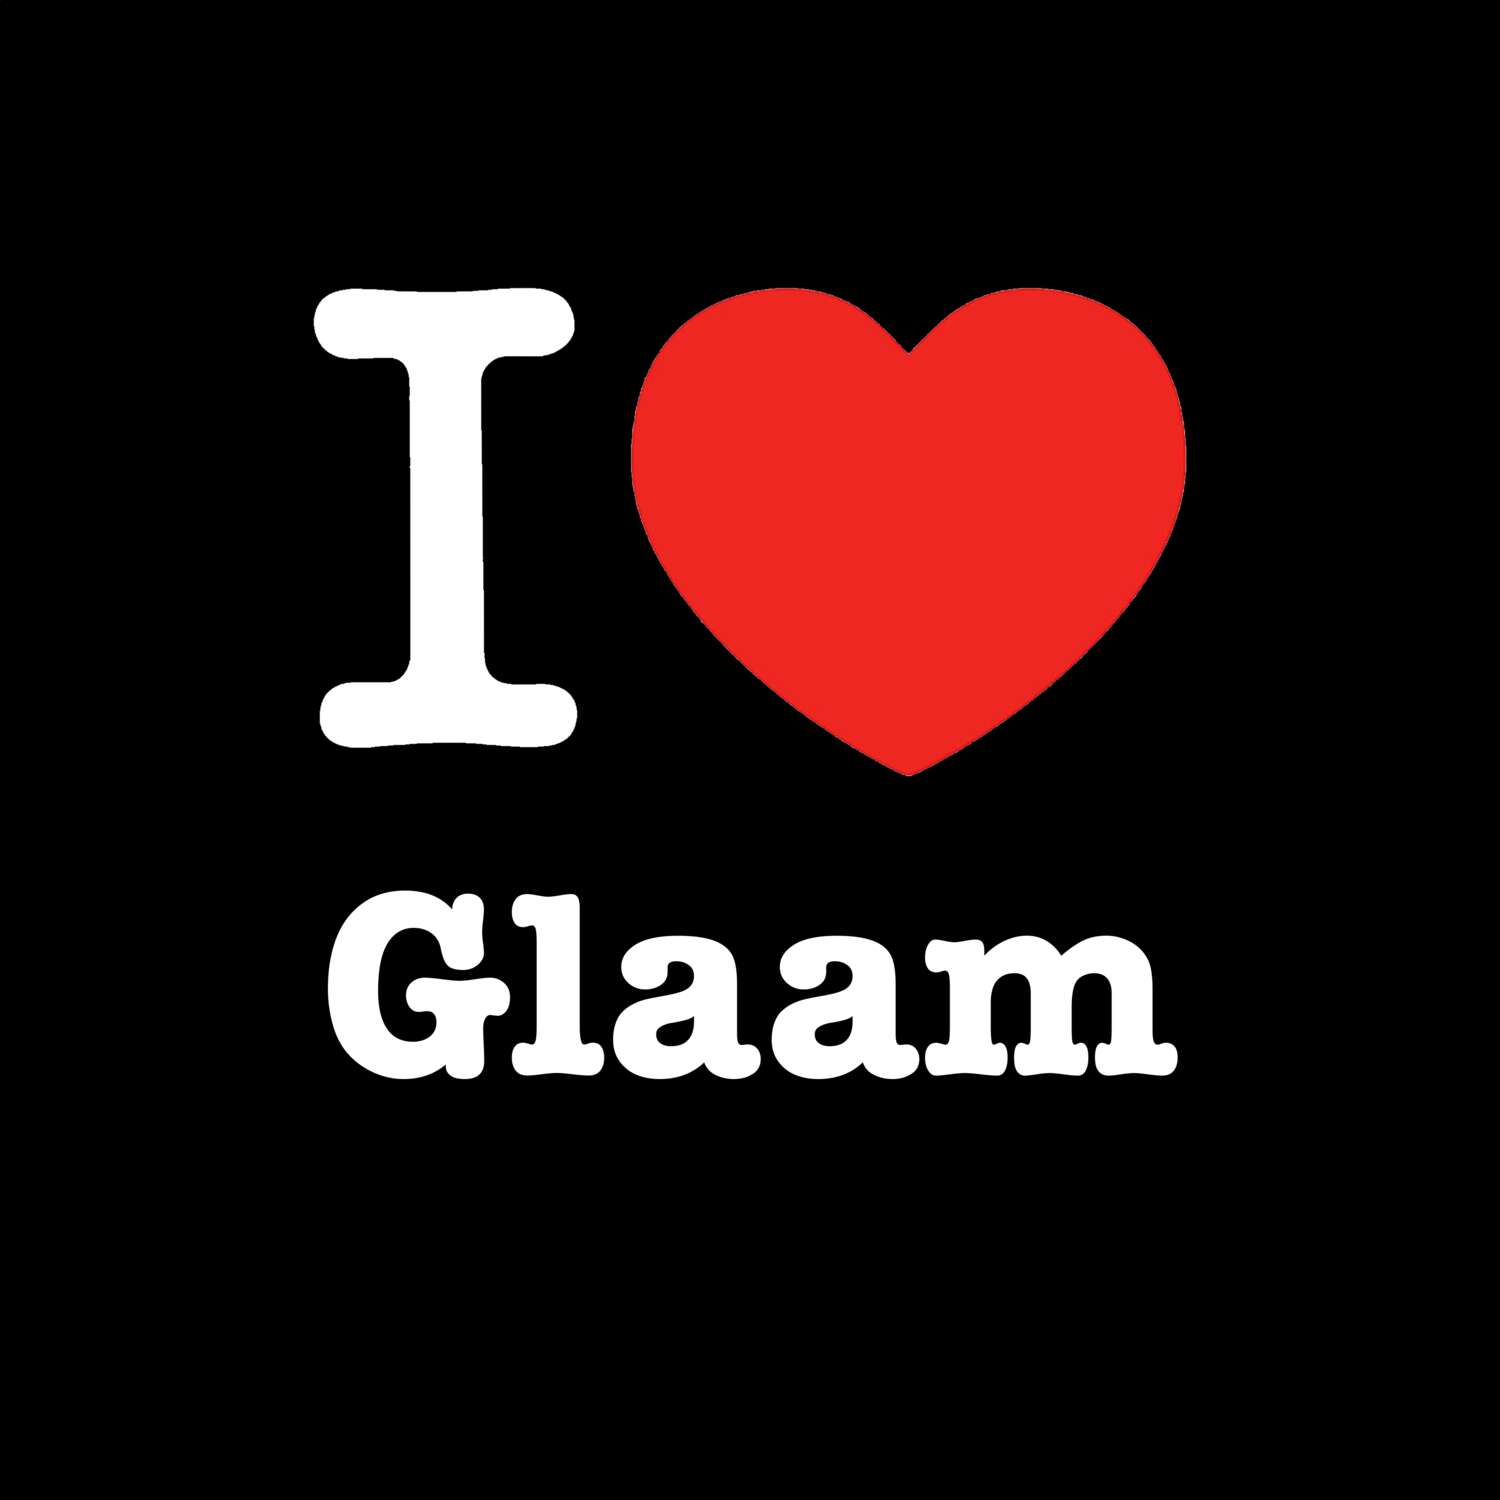 Glaam T-Shirt »I love«